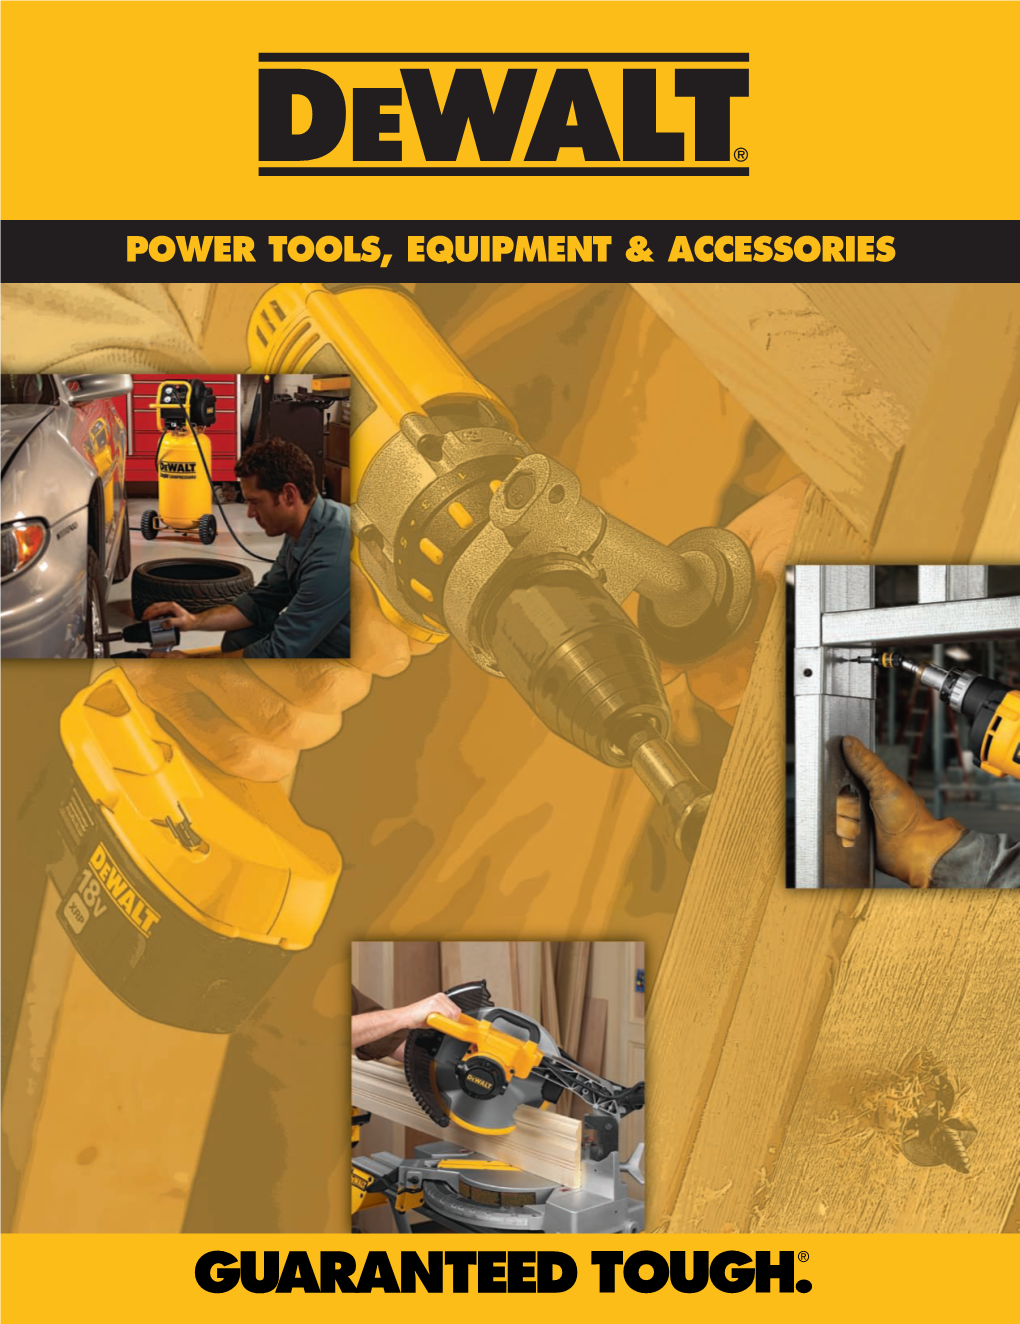 Power Tools, Equipment & Accessories